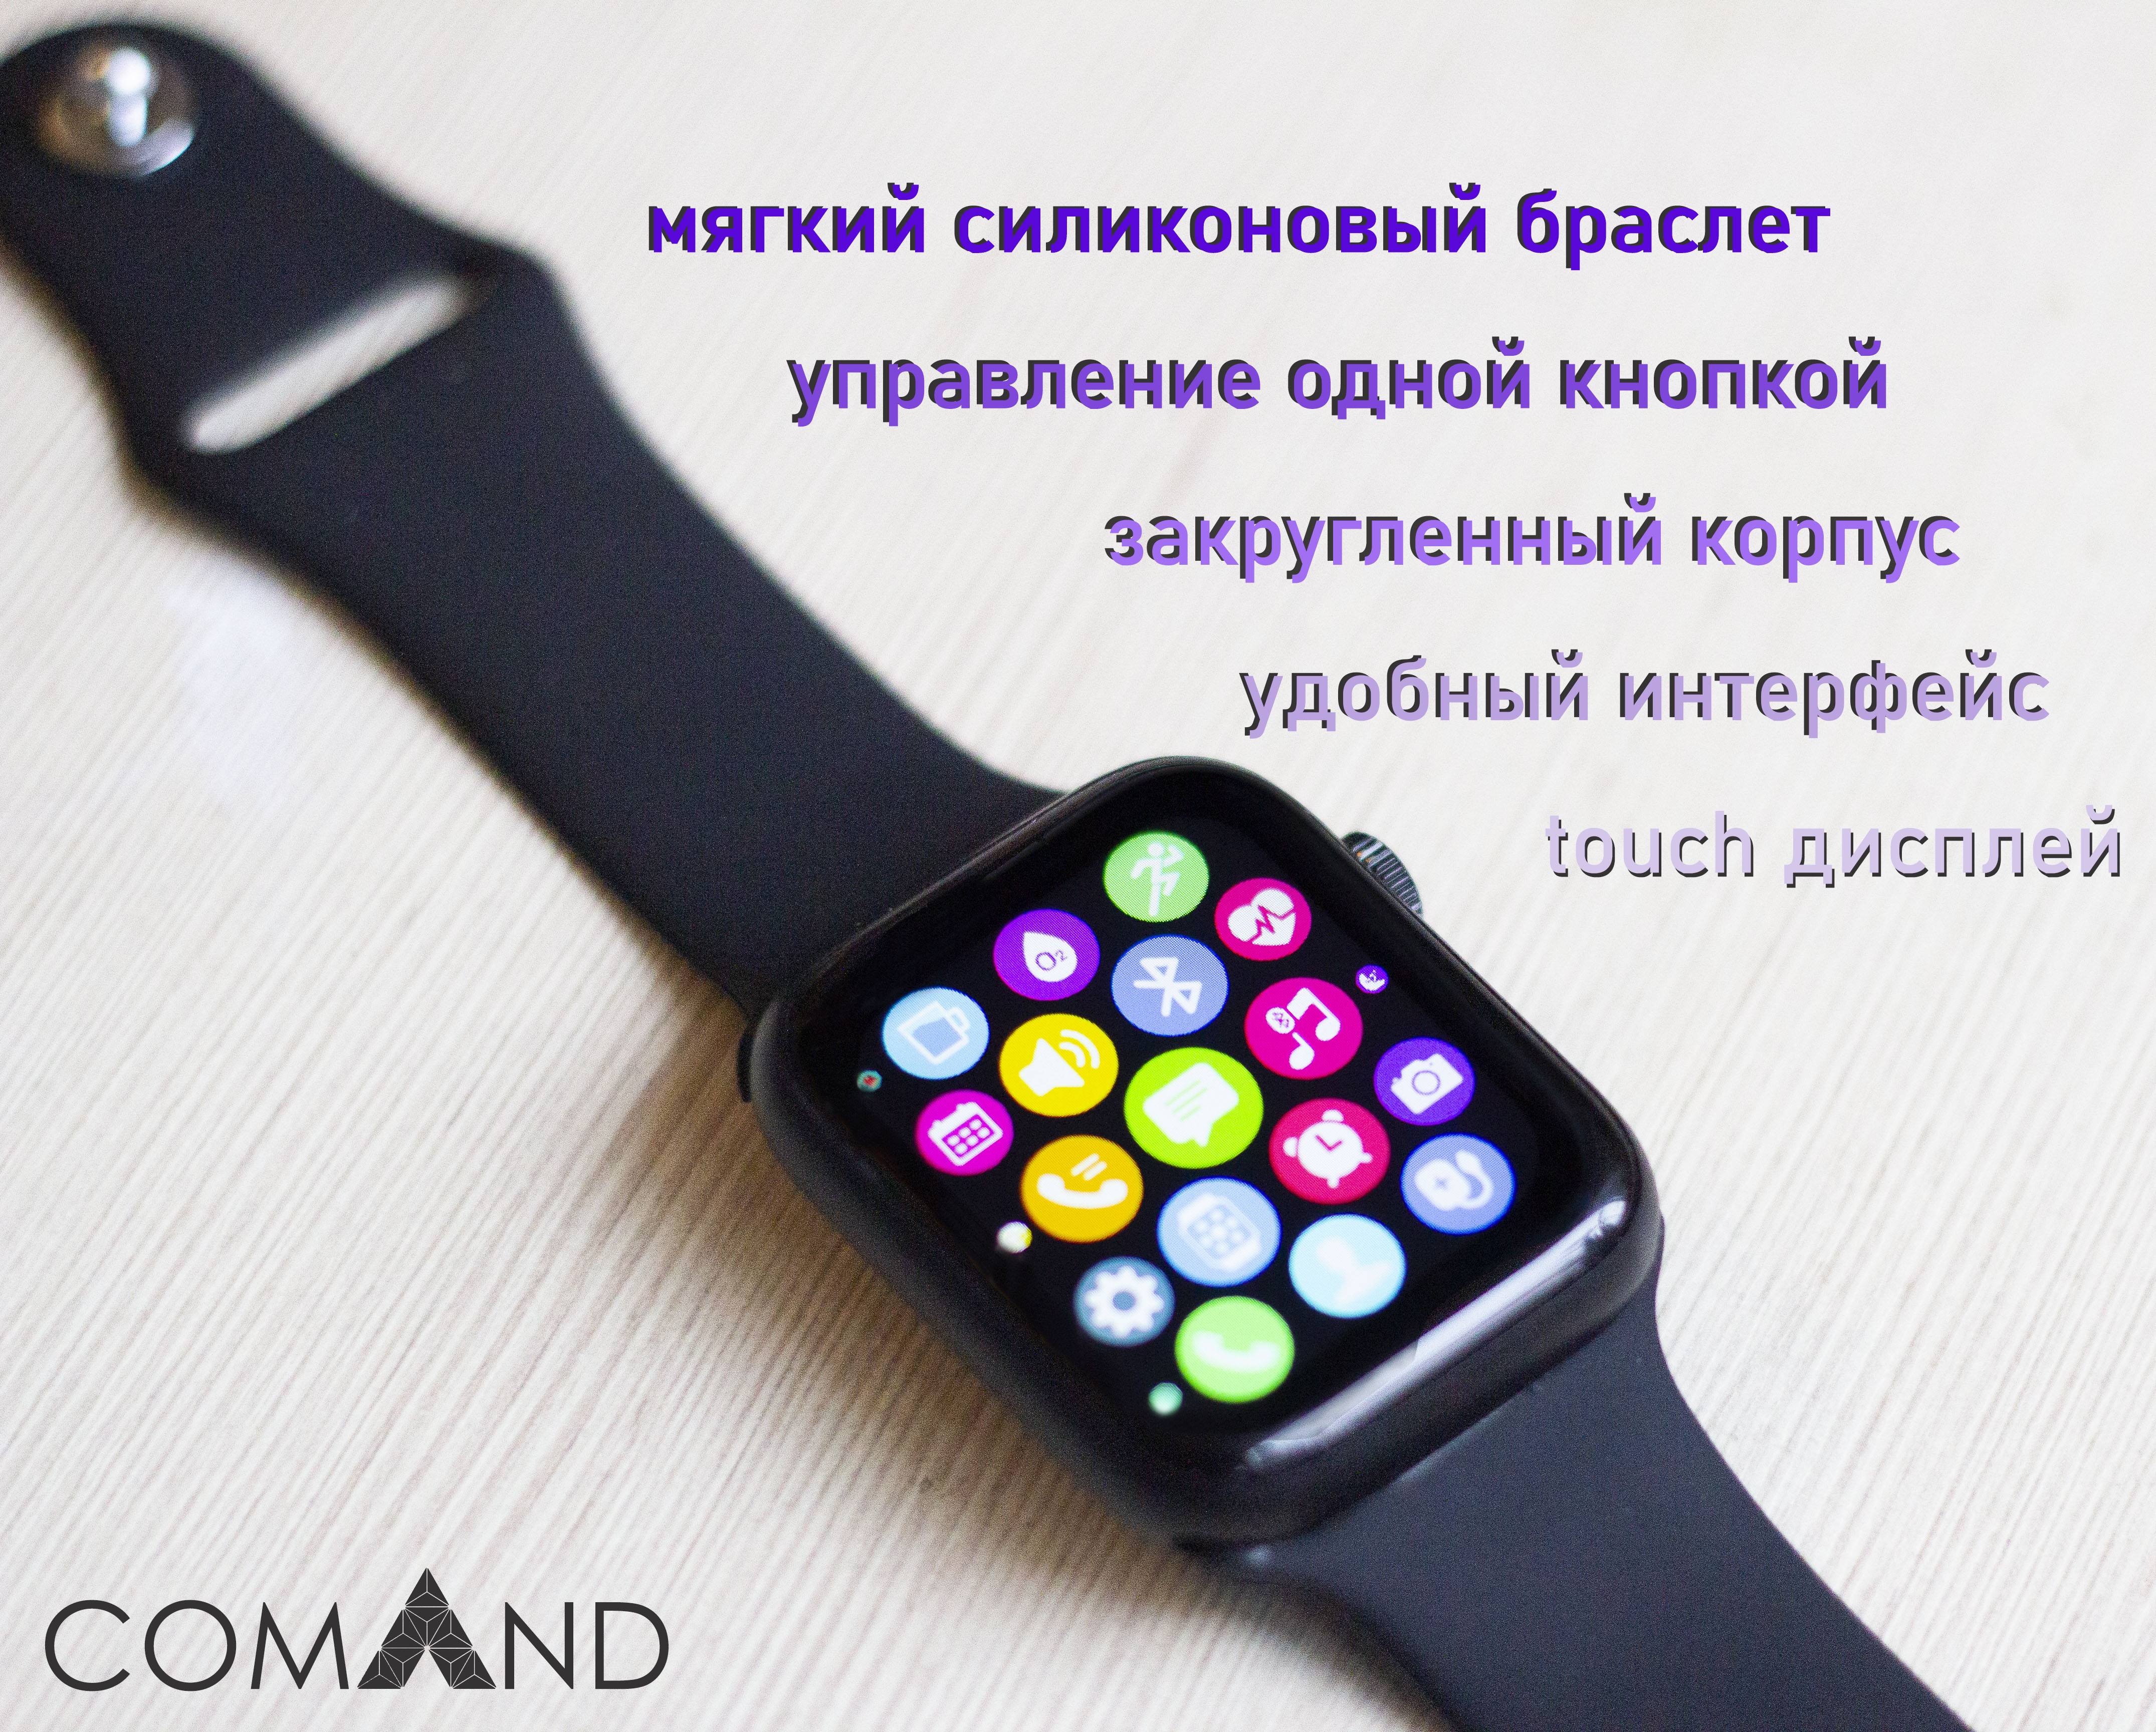 Смарт-часы aliexpress new smart watch gt08 smartwatch support sim card camera for android phone – отзывы